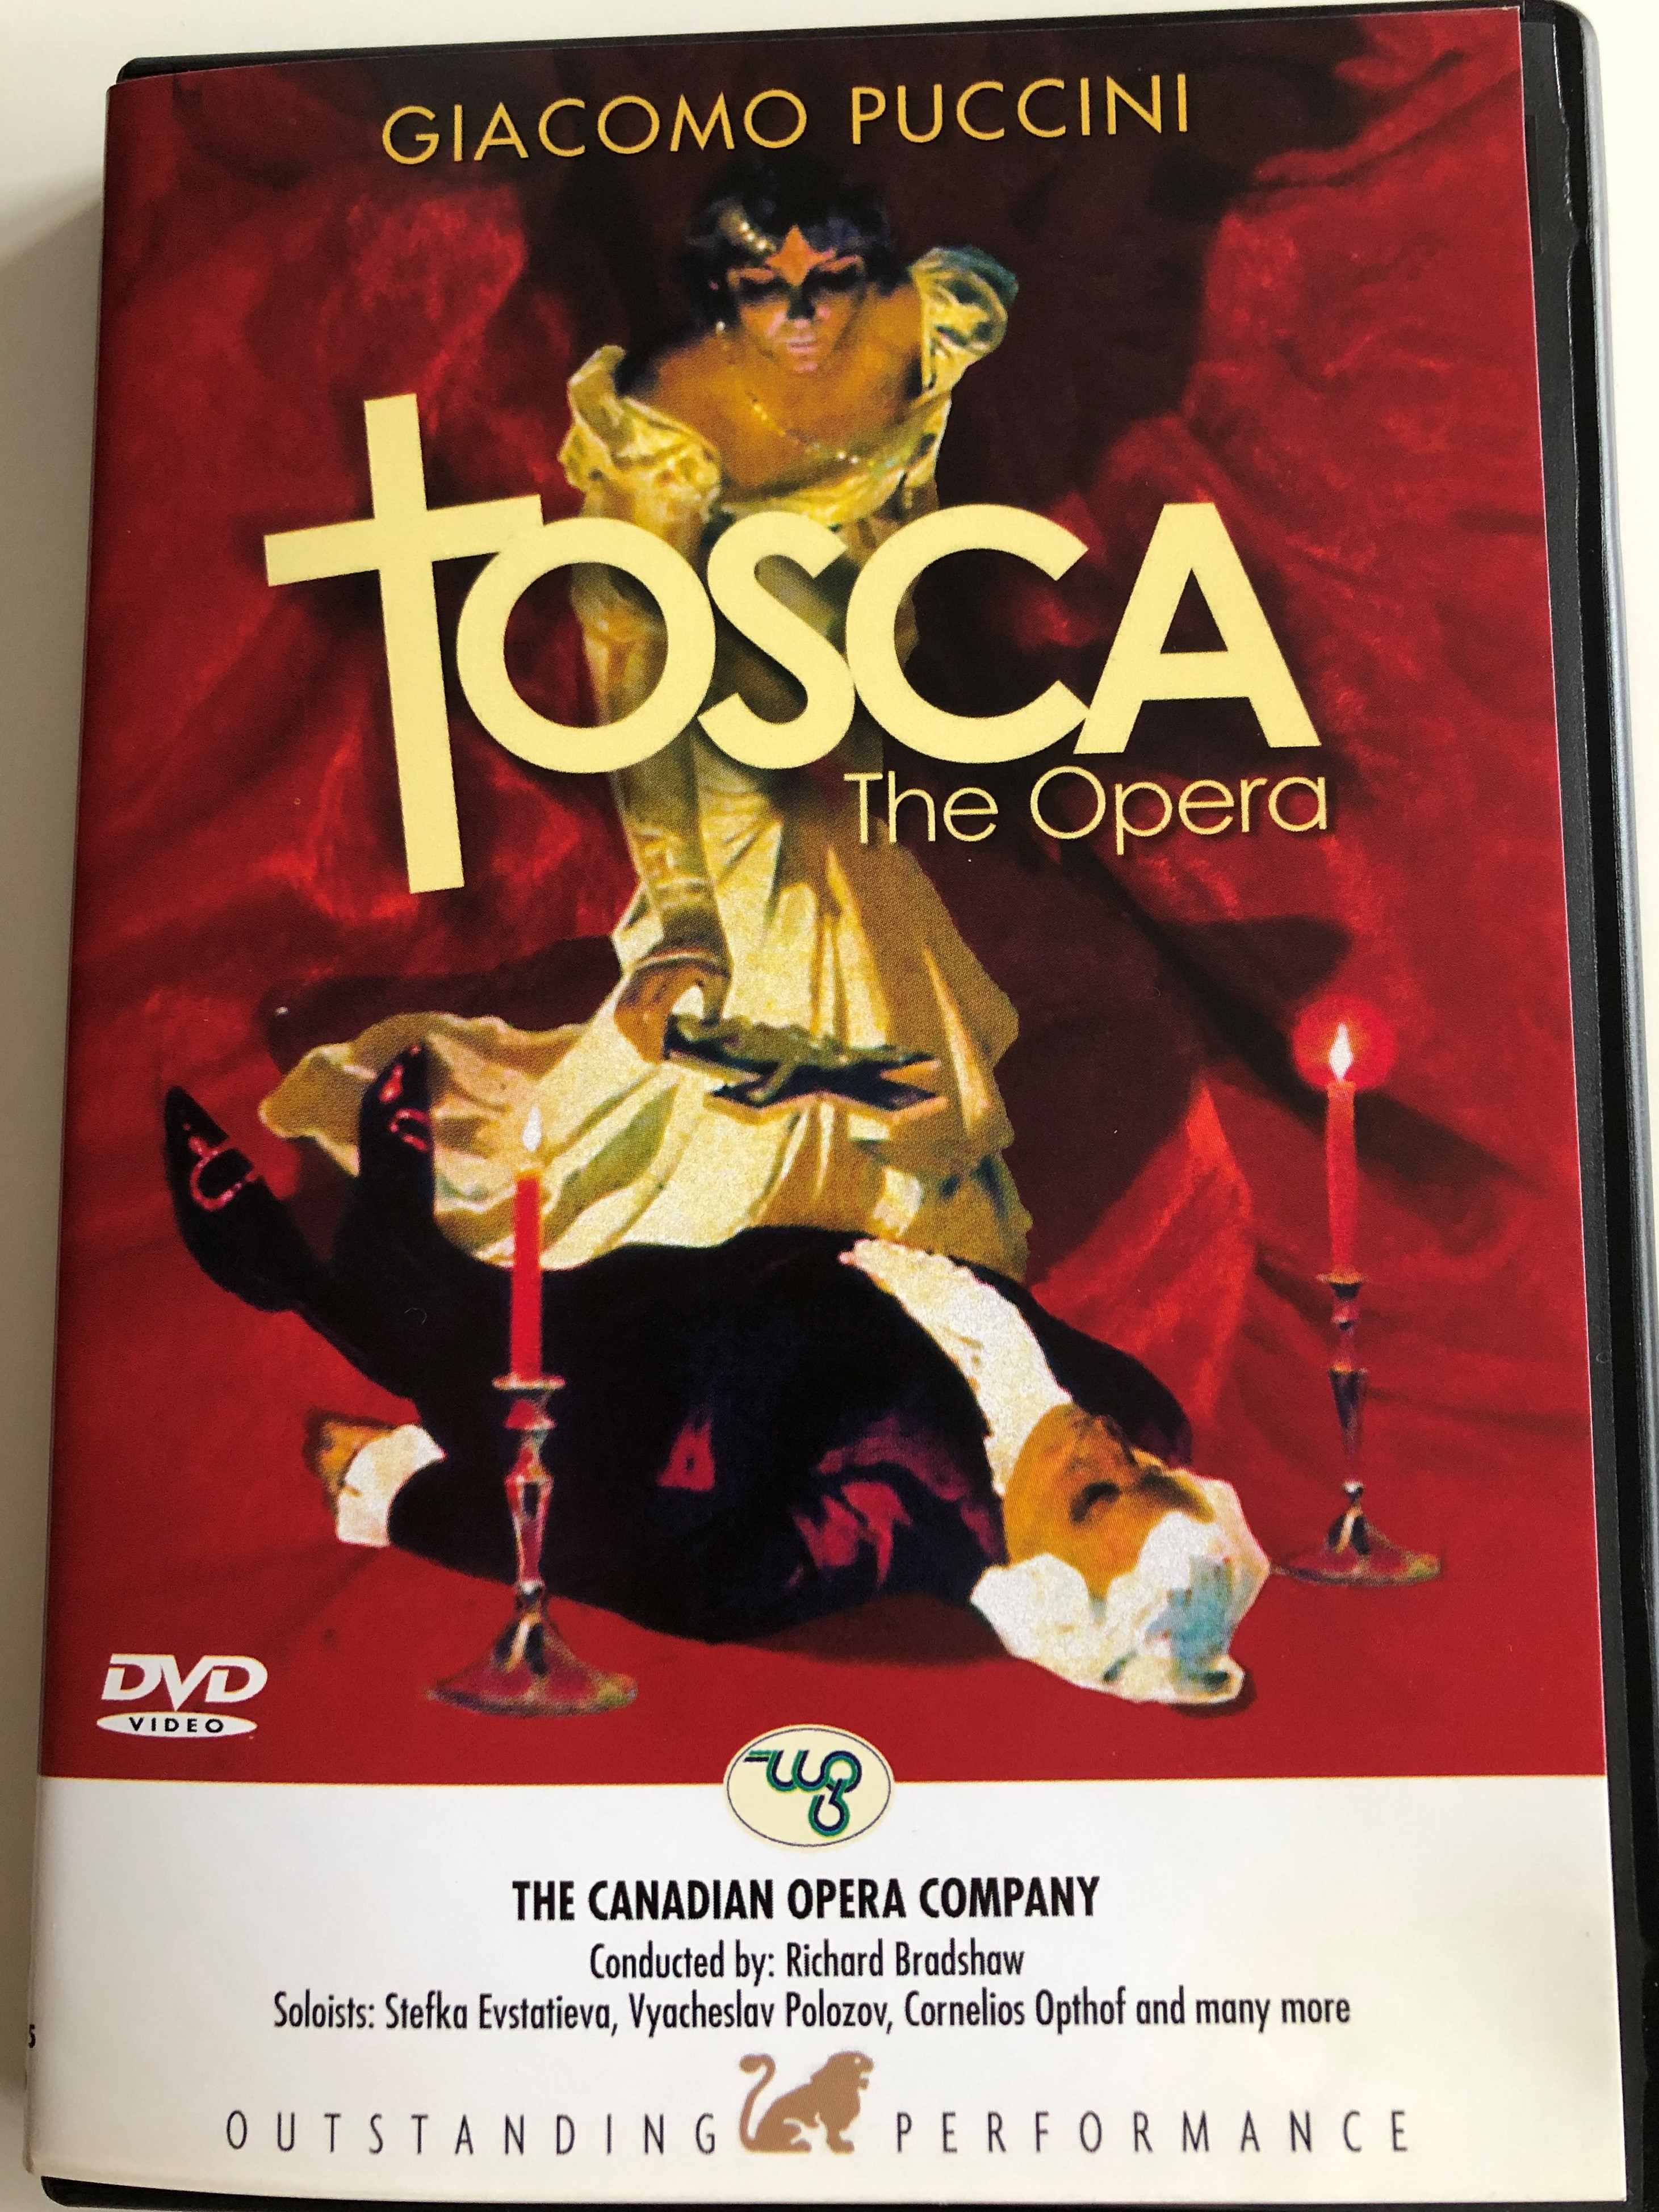 Giacomo Puccini Tosca the Opera DVD 2006 The Canadian Opera Company  Conducted by Richard Bradshaw Soloists: Stefka Evstatieva, Vyacheslav  Polozov, Cornelios Opthof and many more bibleinmylanguage